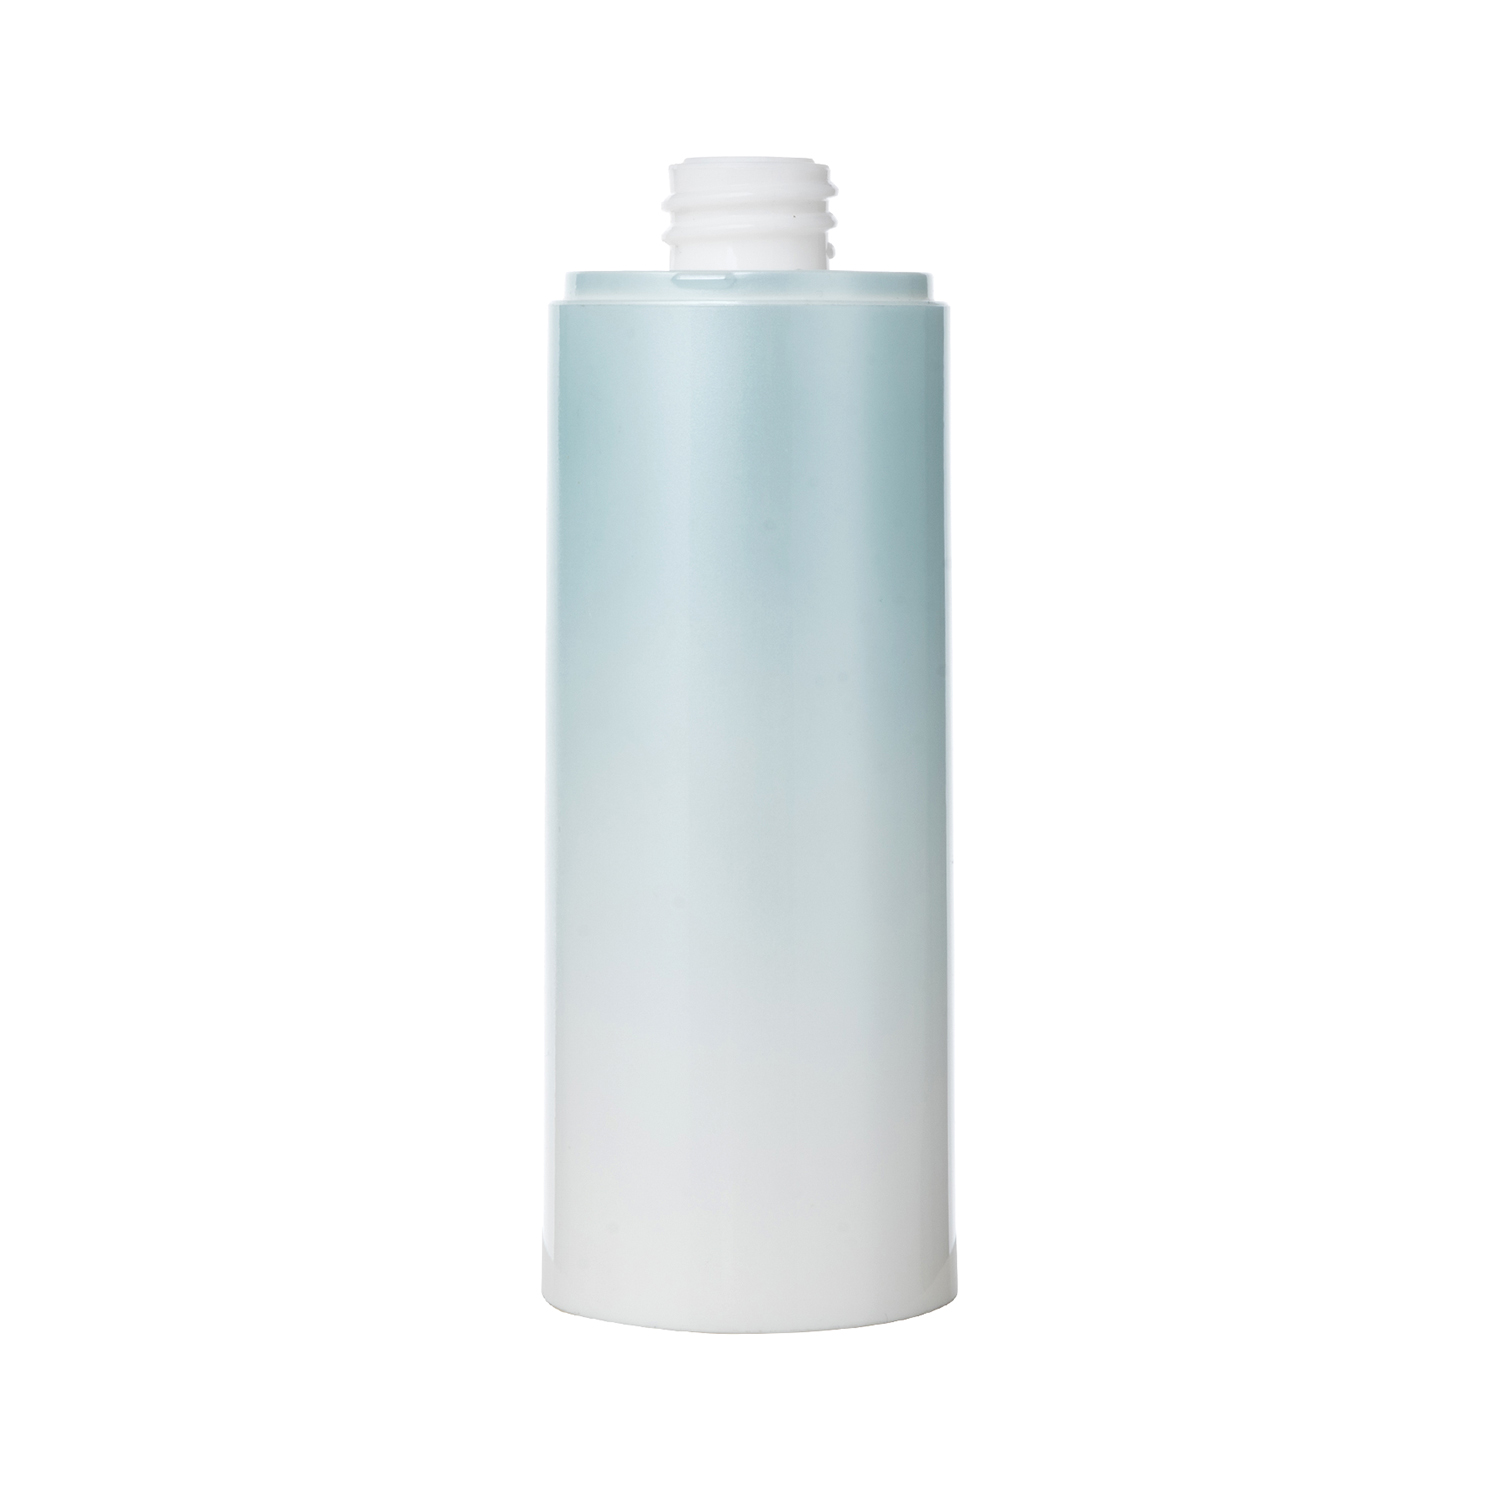 15ml 30ml 40ml 50ml 80ml 100ml PP Material Airless Bottles High Quality Cosmetic Airless Bottle